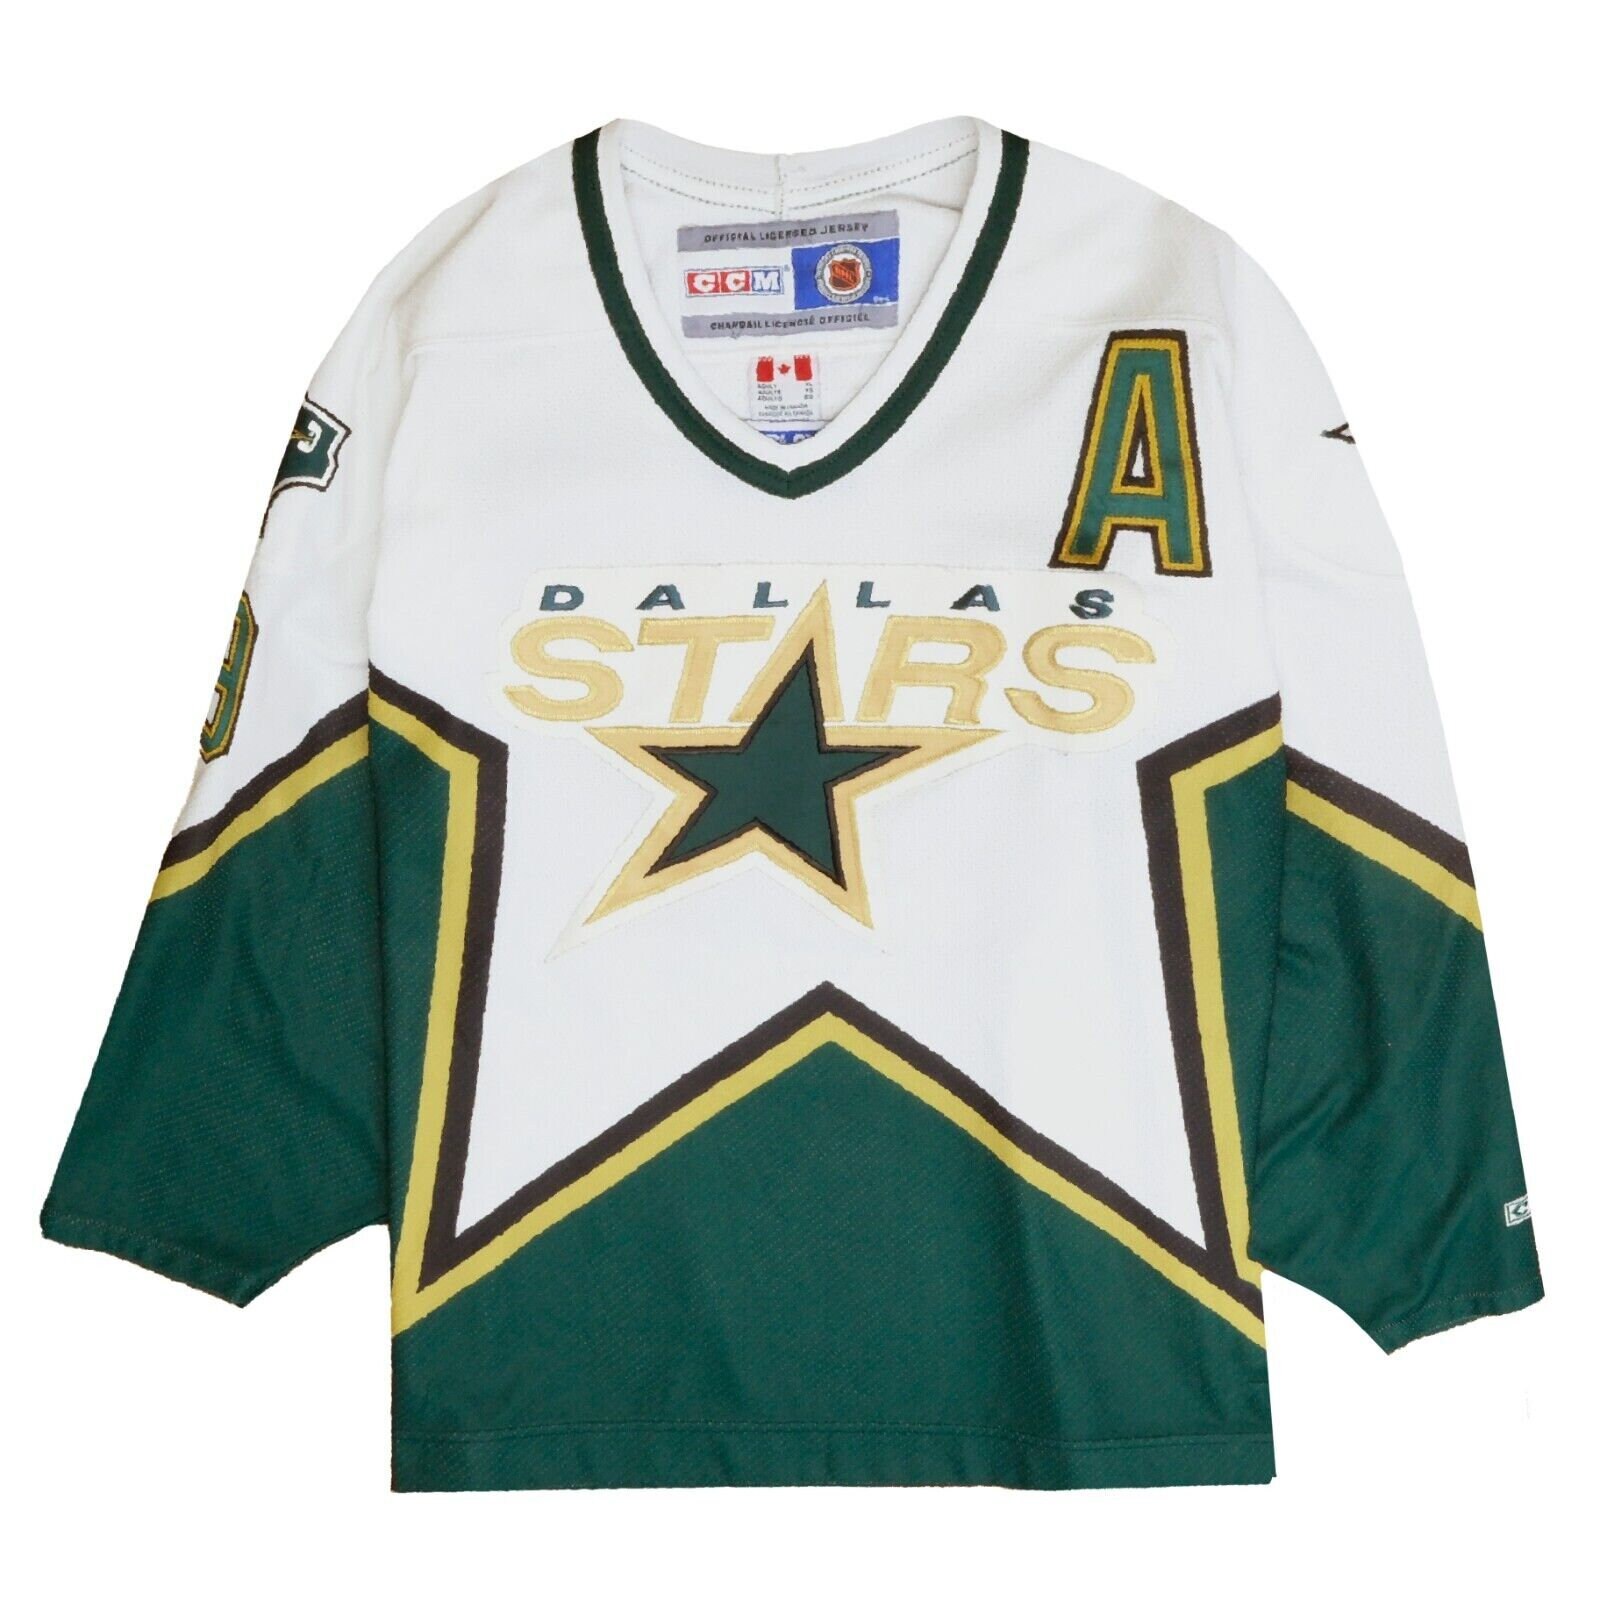 Vintage Vintage 90s Dallas Stars nhl hockey jersey white XL rare